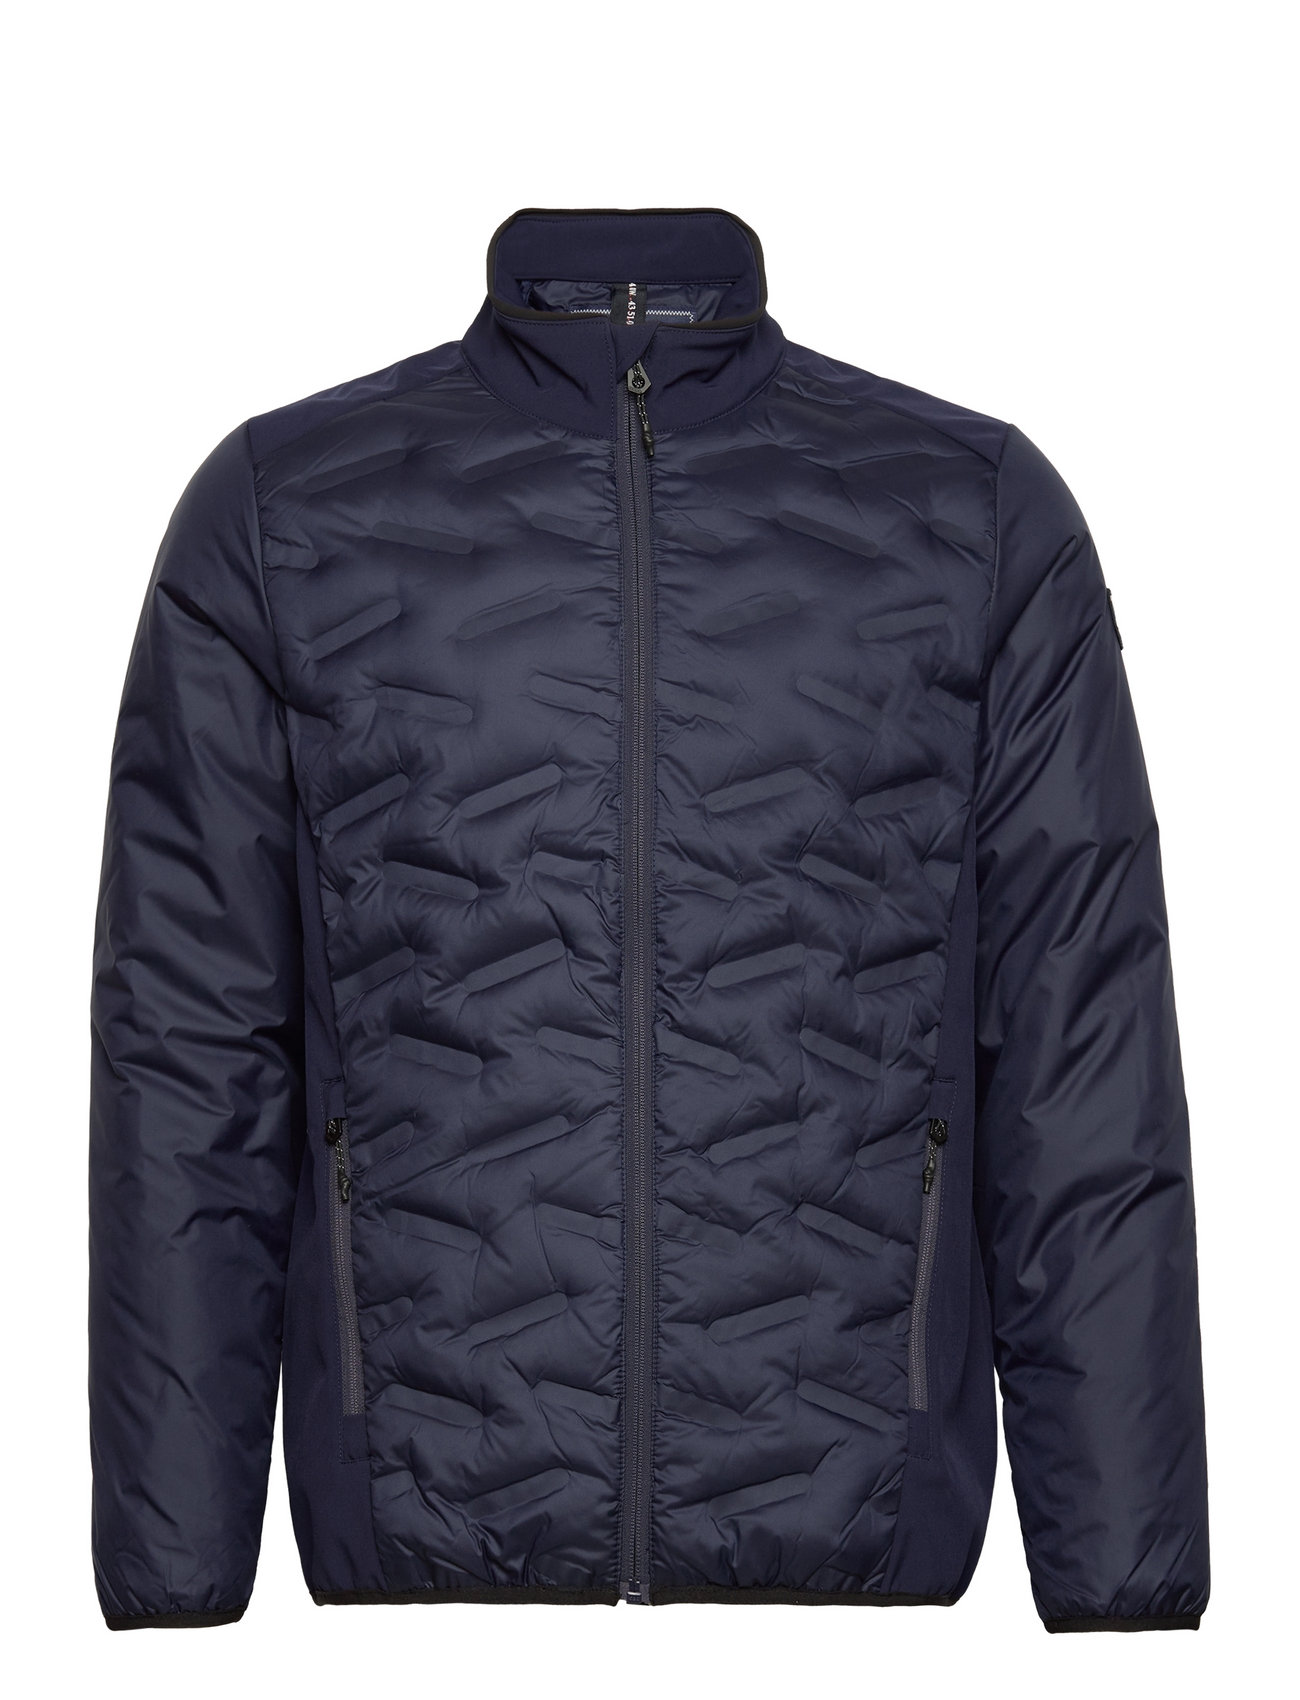 Sebago Light Tech Jacket - 104 €. Buy Padded jackets from Sebago online ...